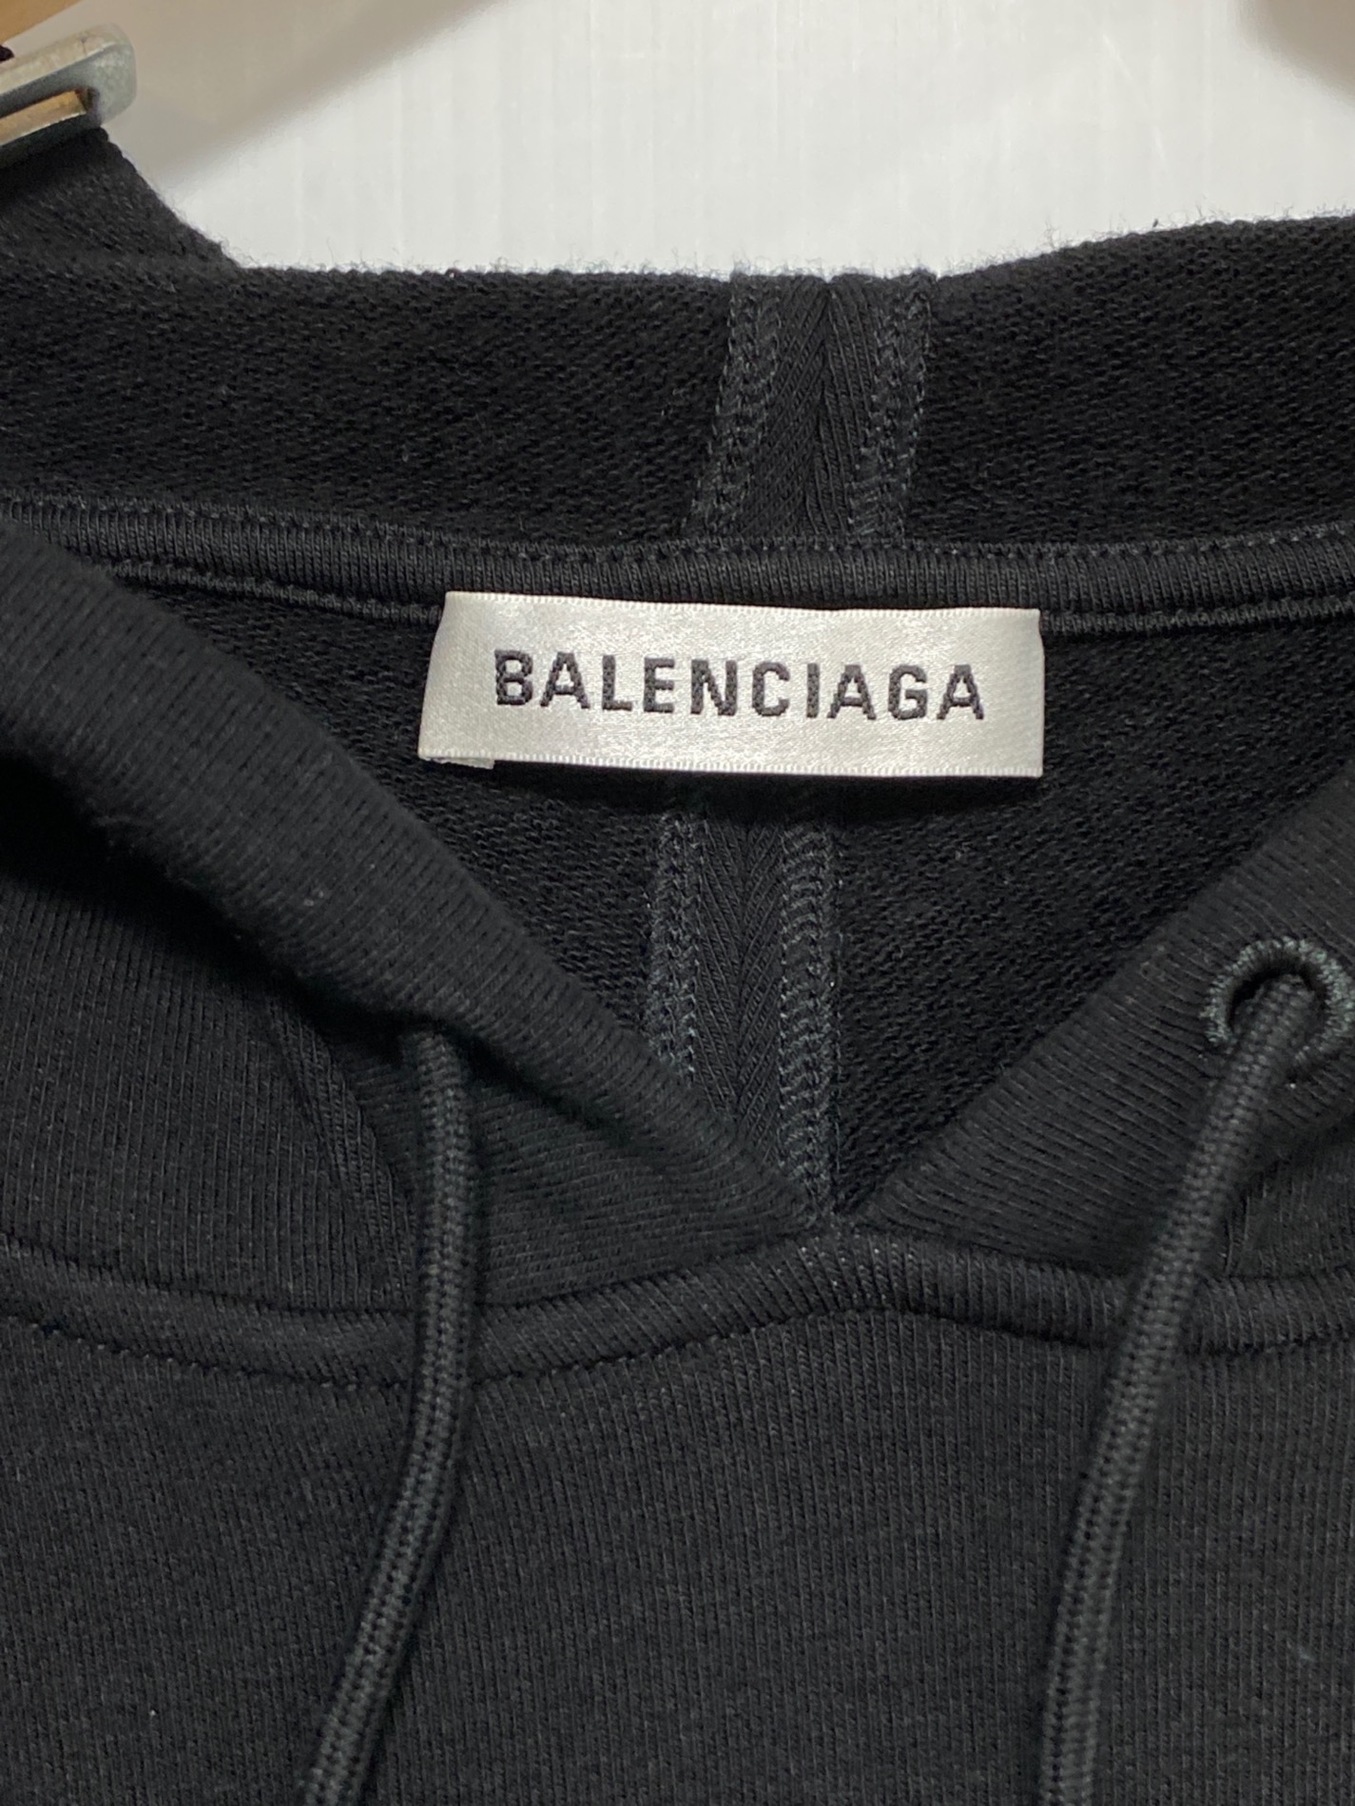 BALENCIAGA (バレンシアガ) スモールロゴパーカー ブラック サイズ:S